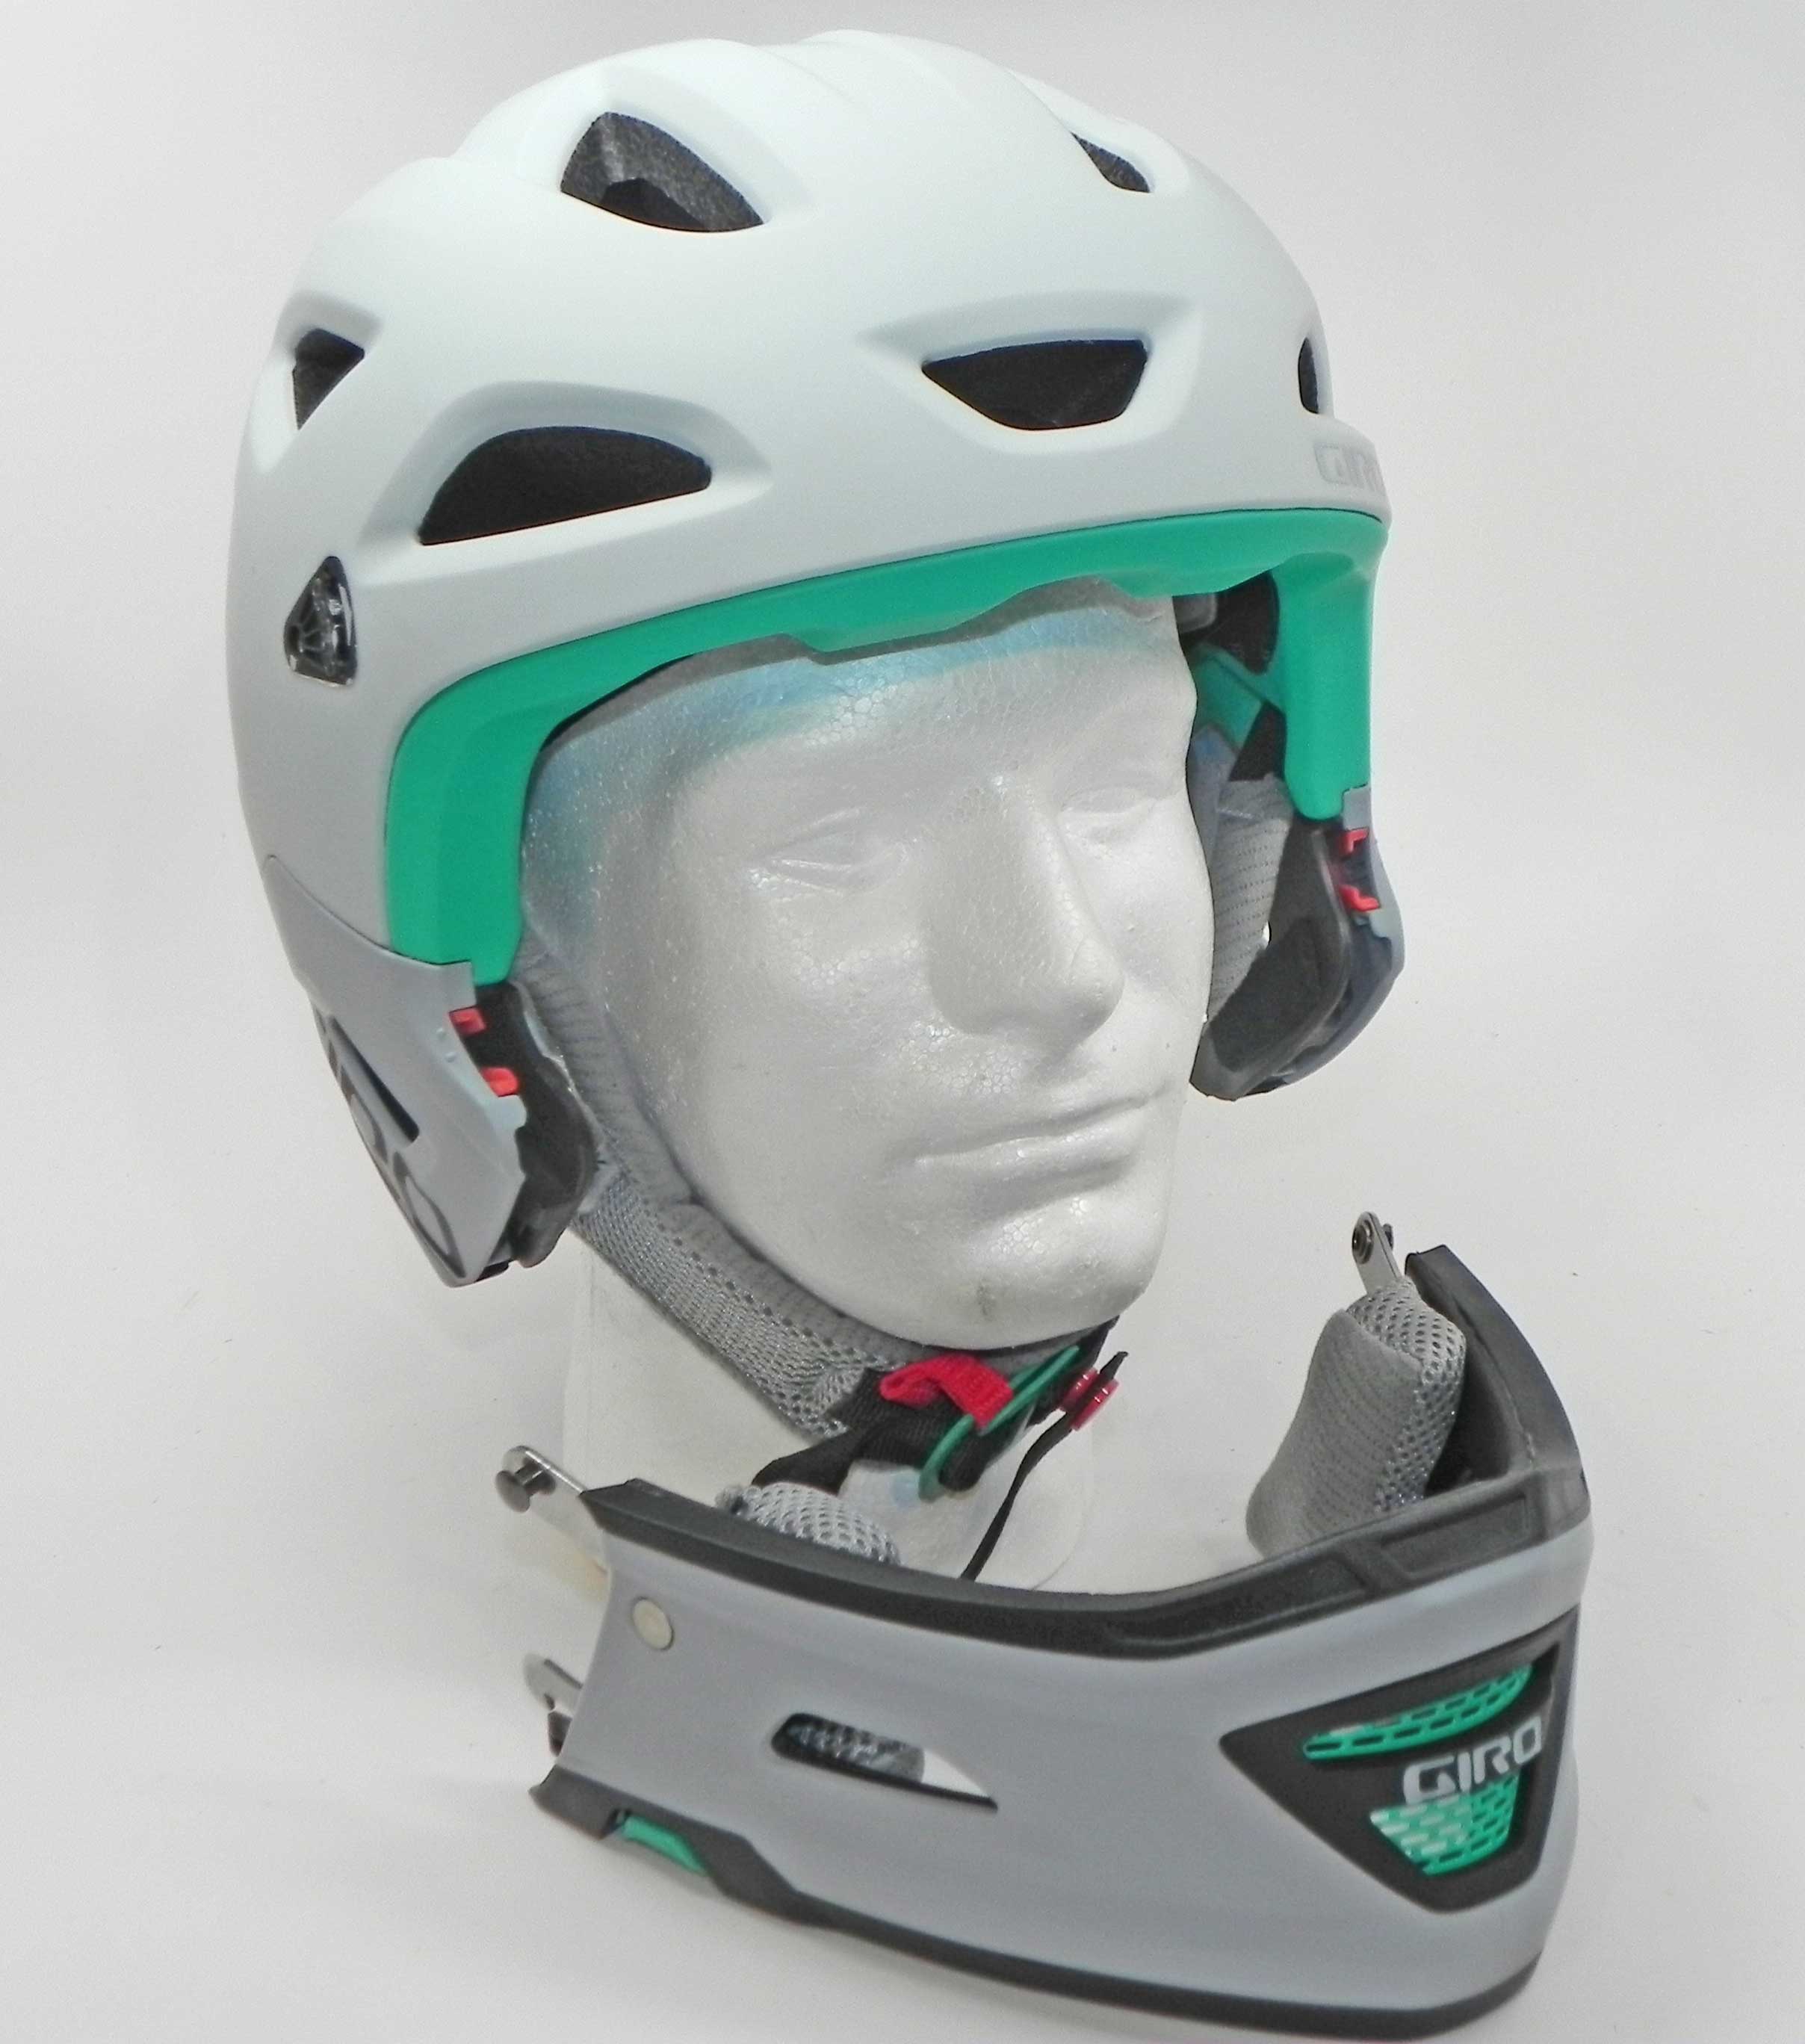 Bicycle Helmets the 2021 Season